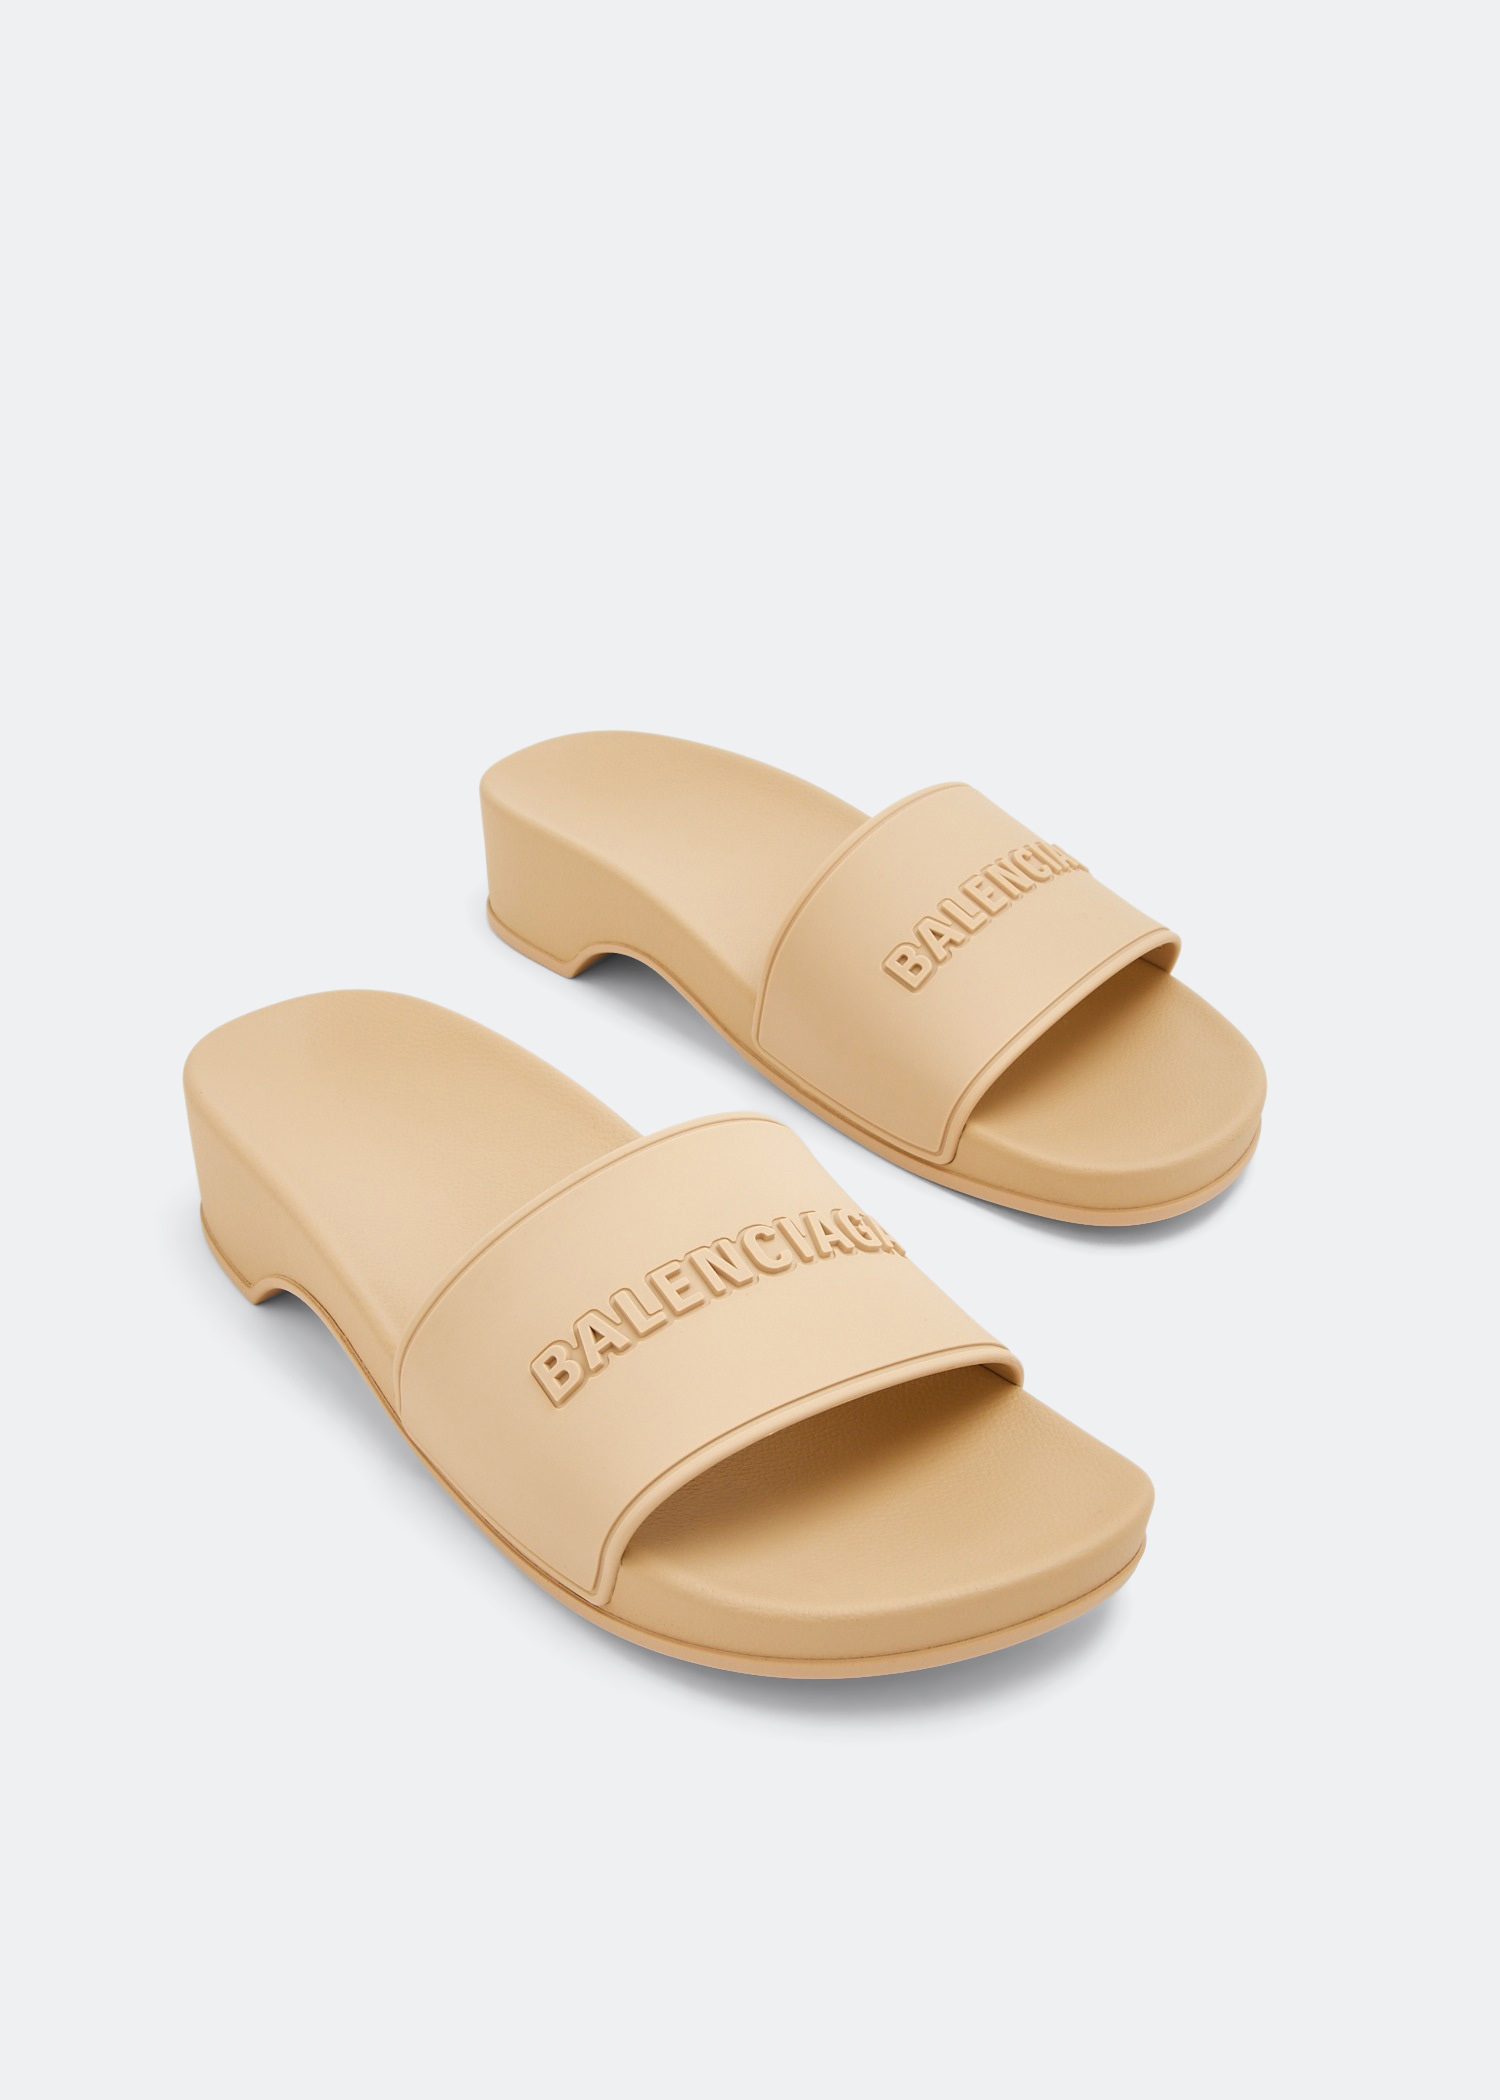 Balenciaga Pool clog slide sandals for Women - Beige in UAE 